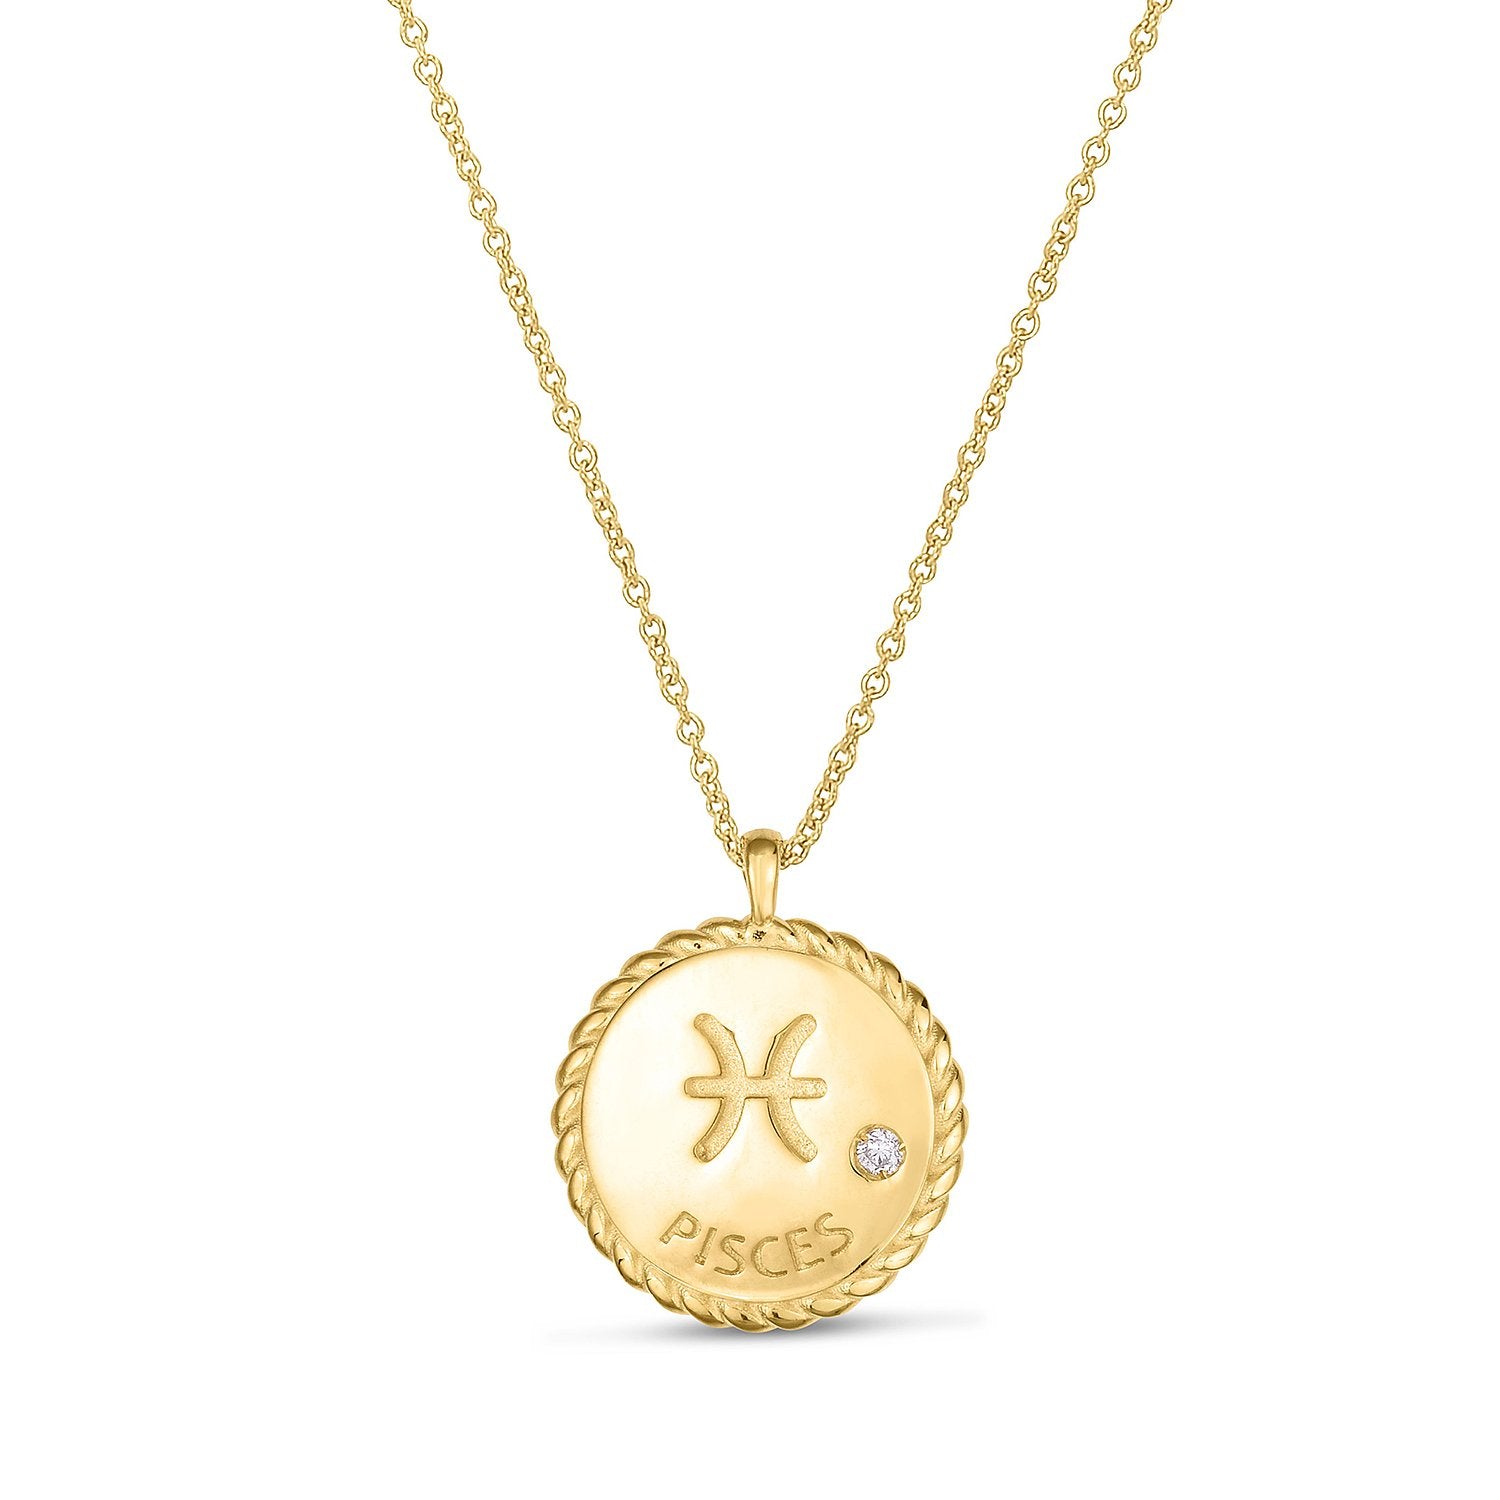 14K Yellow Gold .010ctw Diamond Zodiac Braided Disc Pendant Necklace